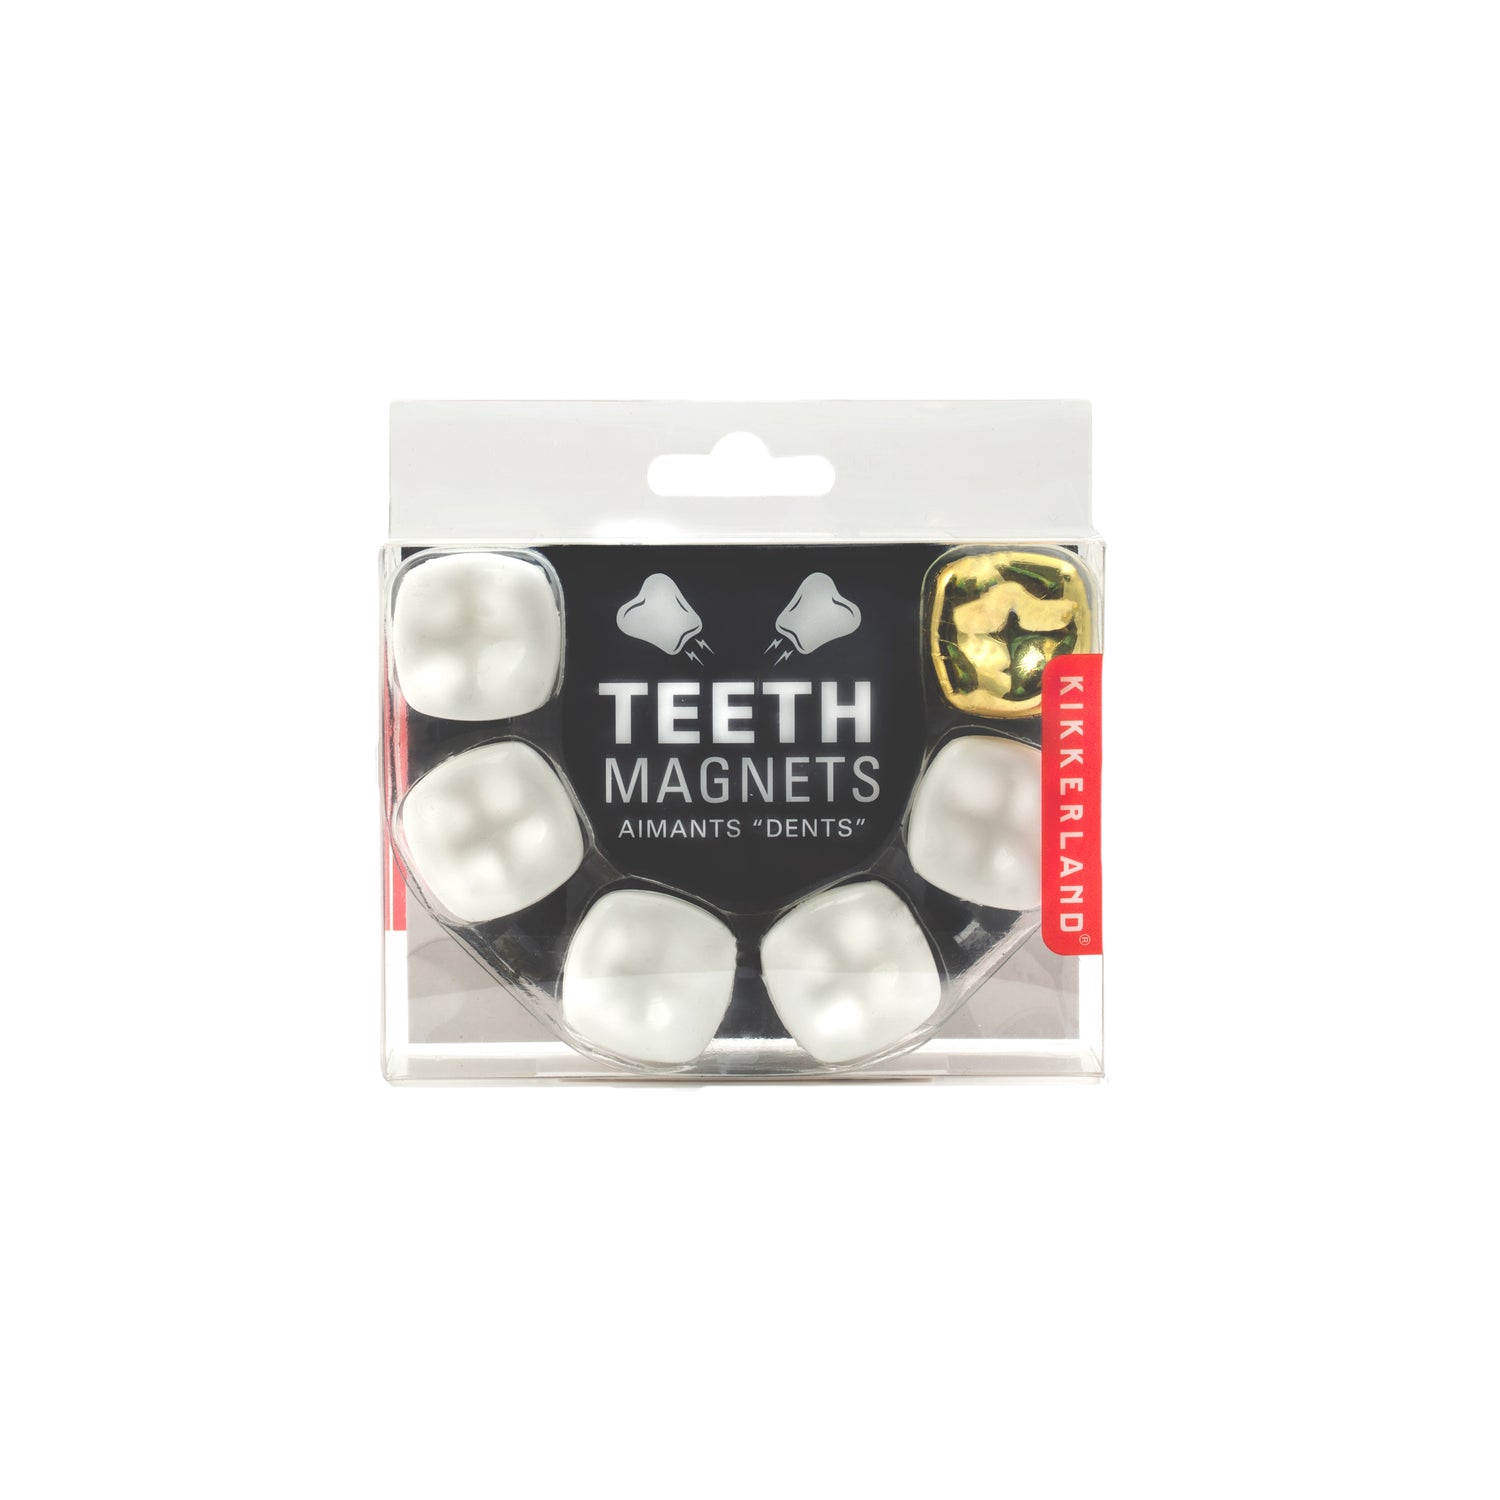 Teeth Magnets